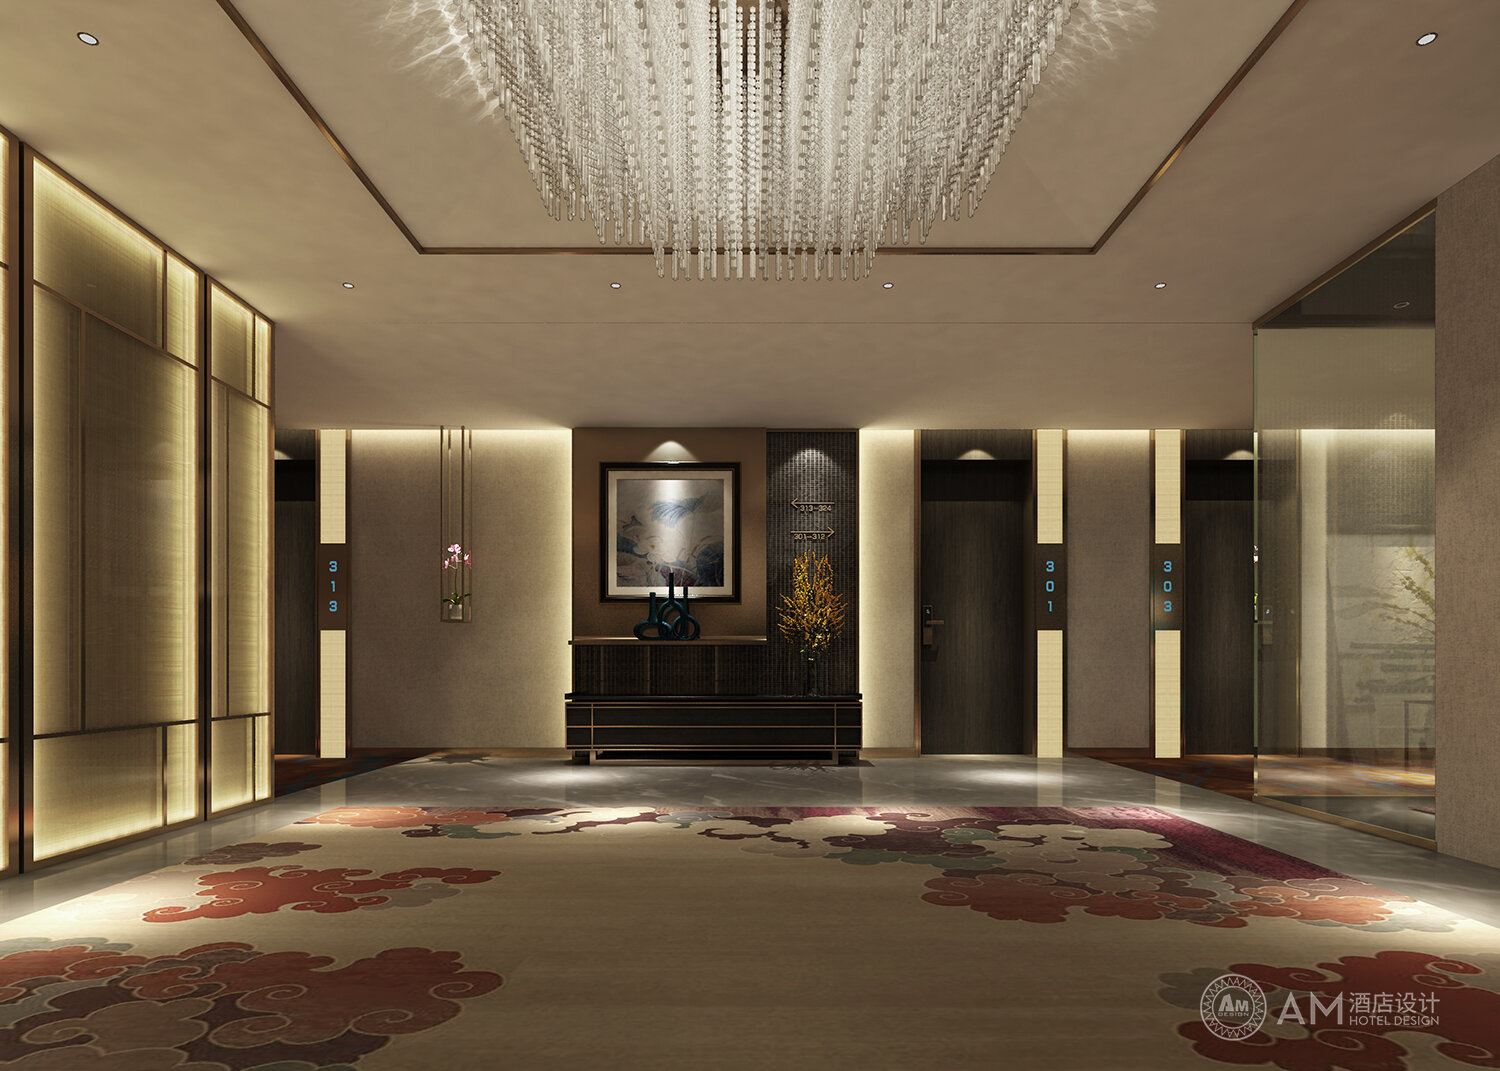 AM DESIGN | Design of elevator hall of wandun hotel in Daqing